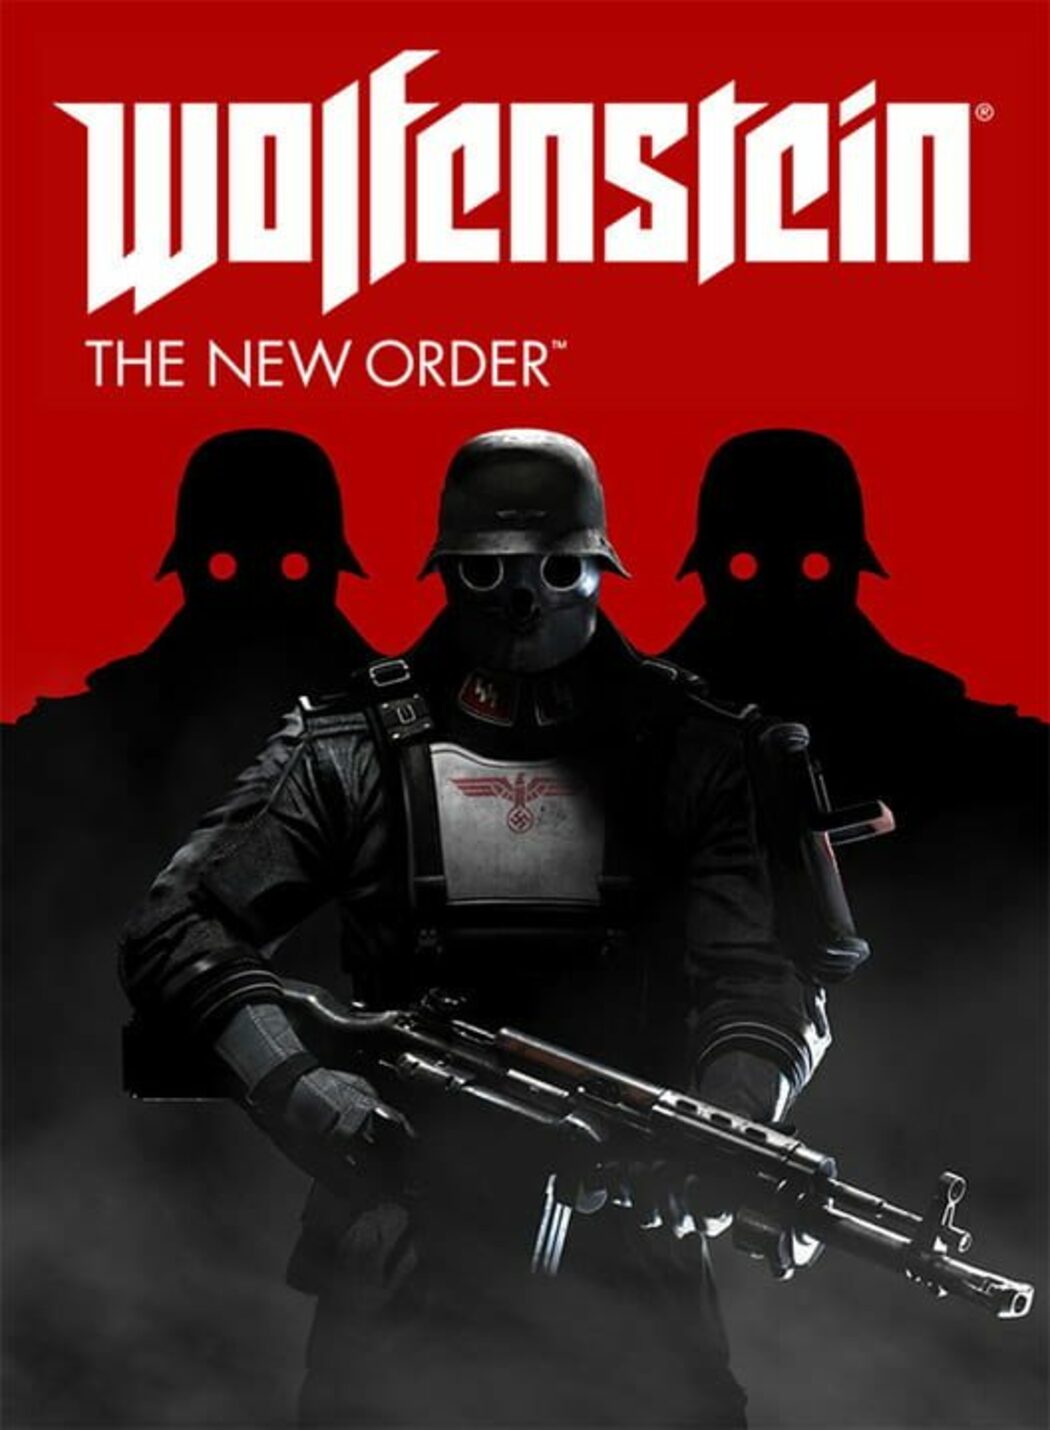 Buy Wolfenstein The New Order and Wolfenstein The Old Blood PC Steam key!  Cheap price